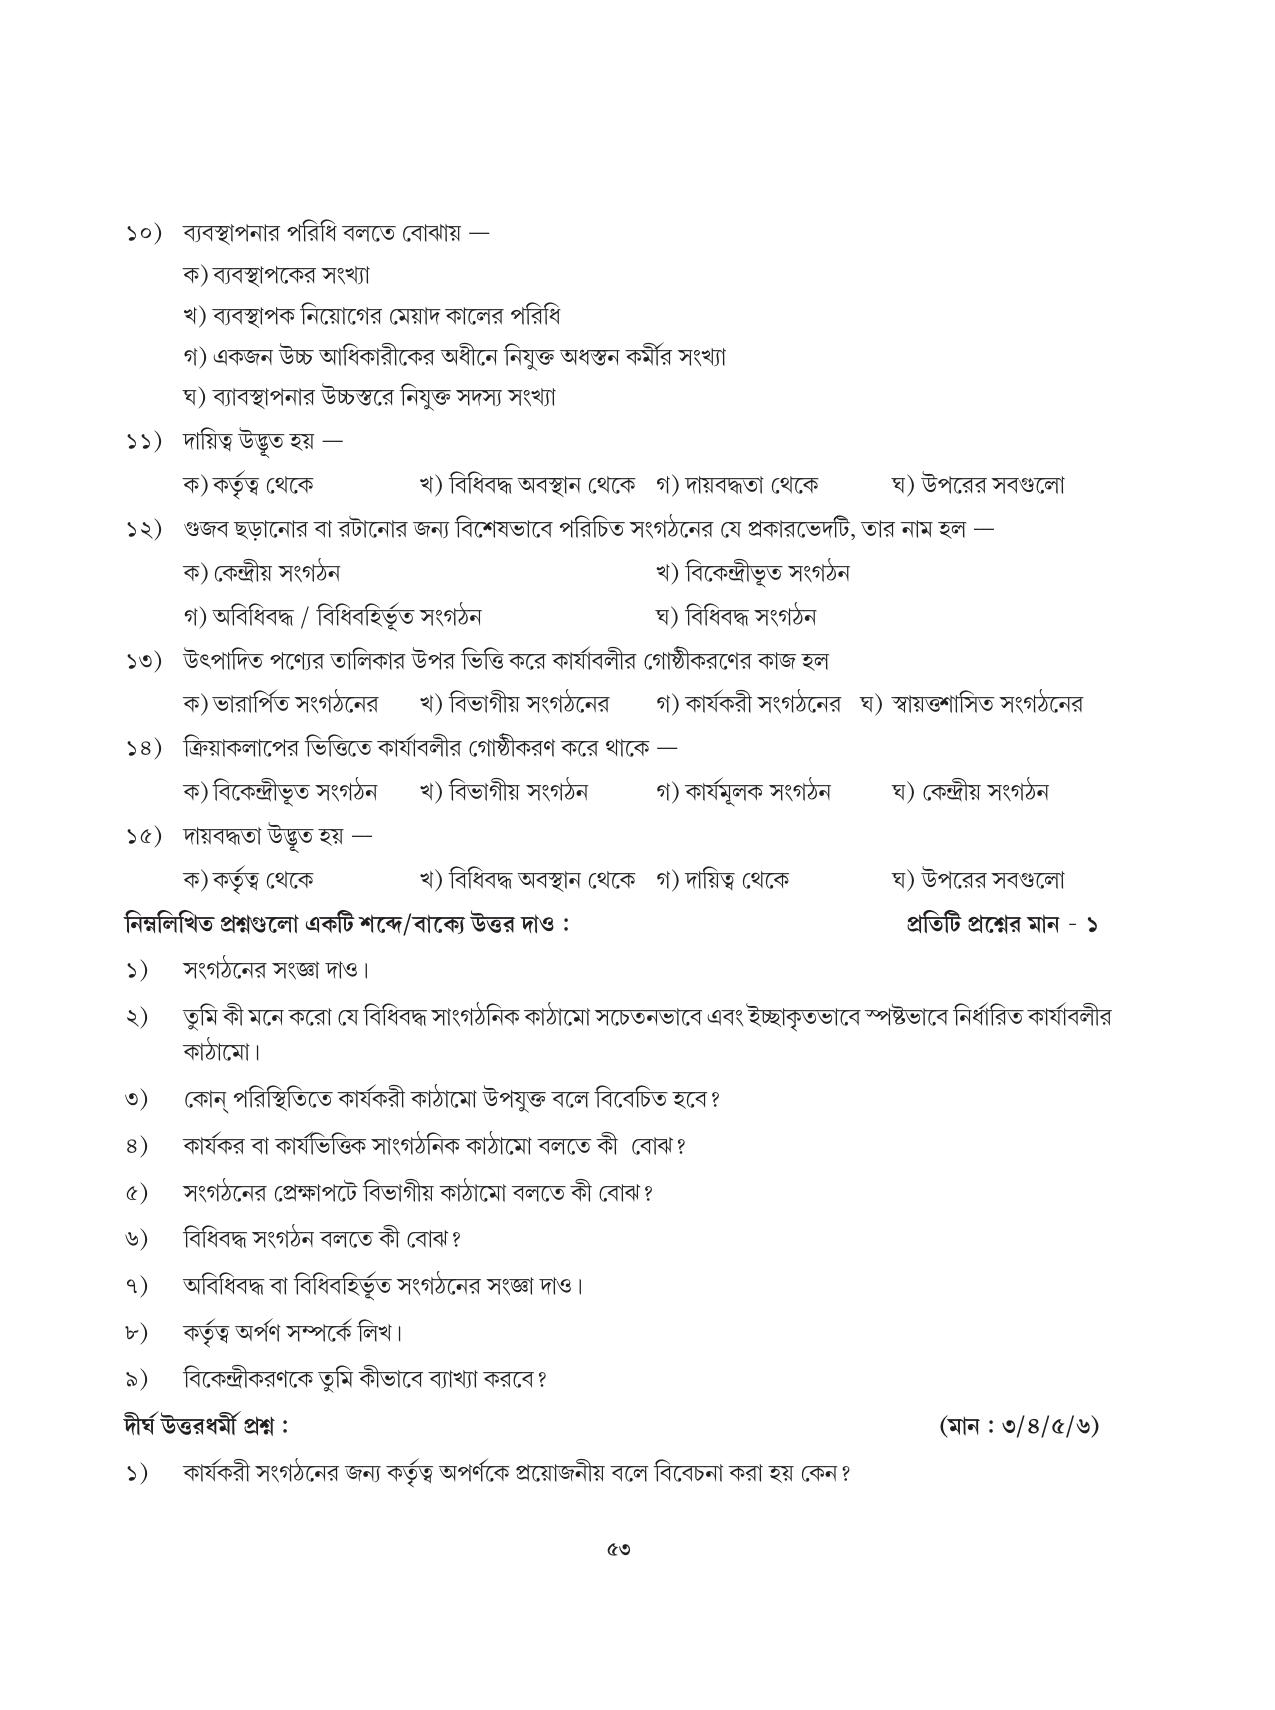 Tripura Board Class 12 Karbari Shastra Bengali Version Workbooks - Page 53